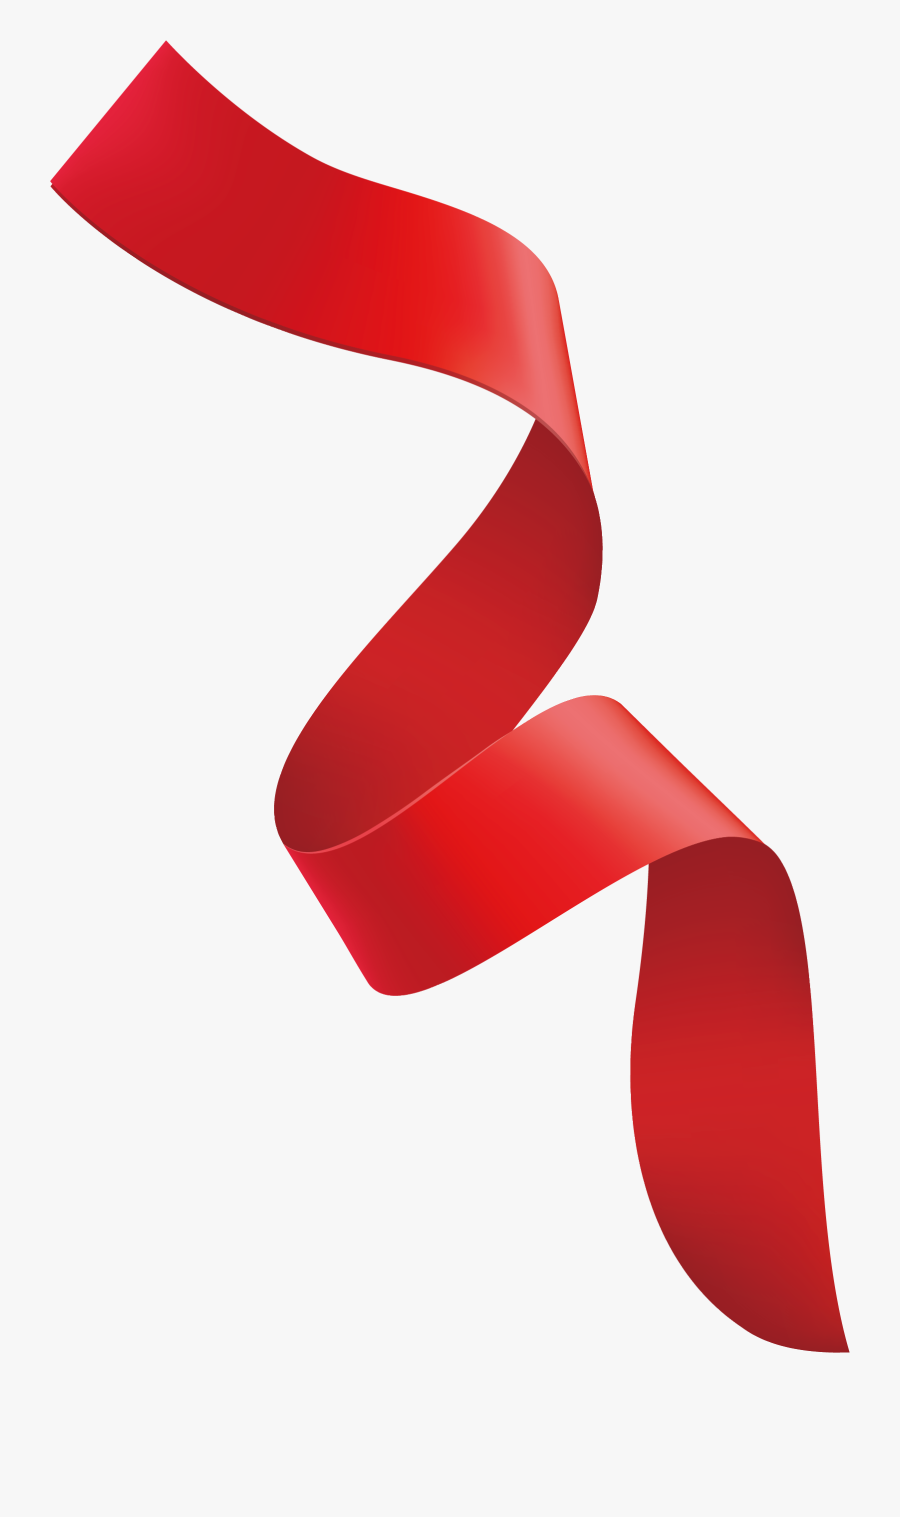 Red Ribbon Red Ribbon - Red Ribbon Png, Transparent Clipart